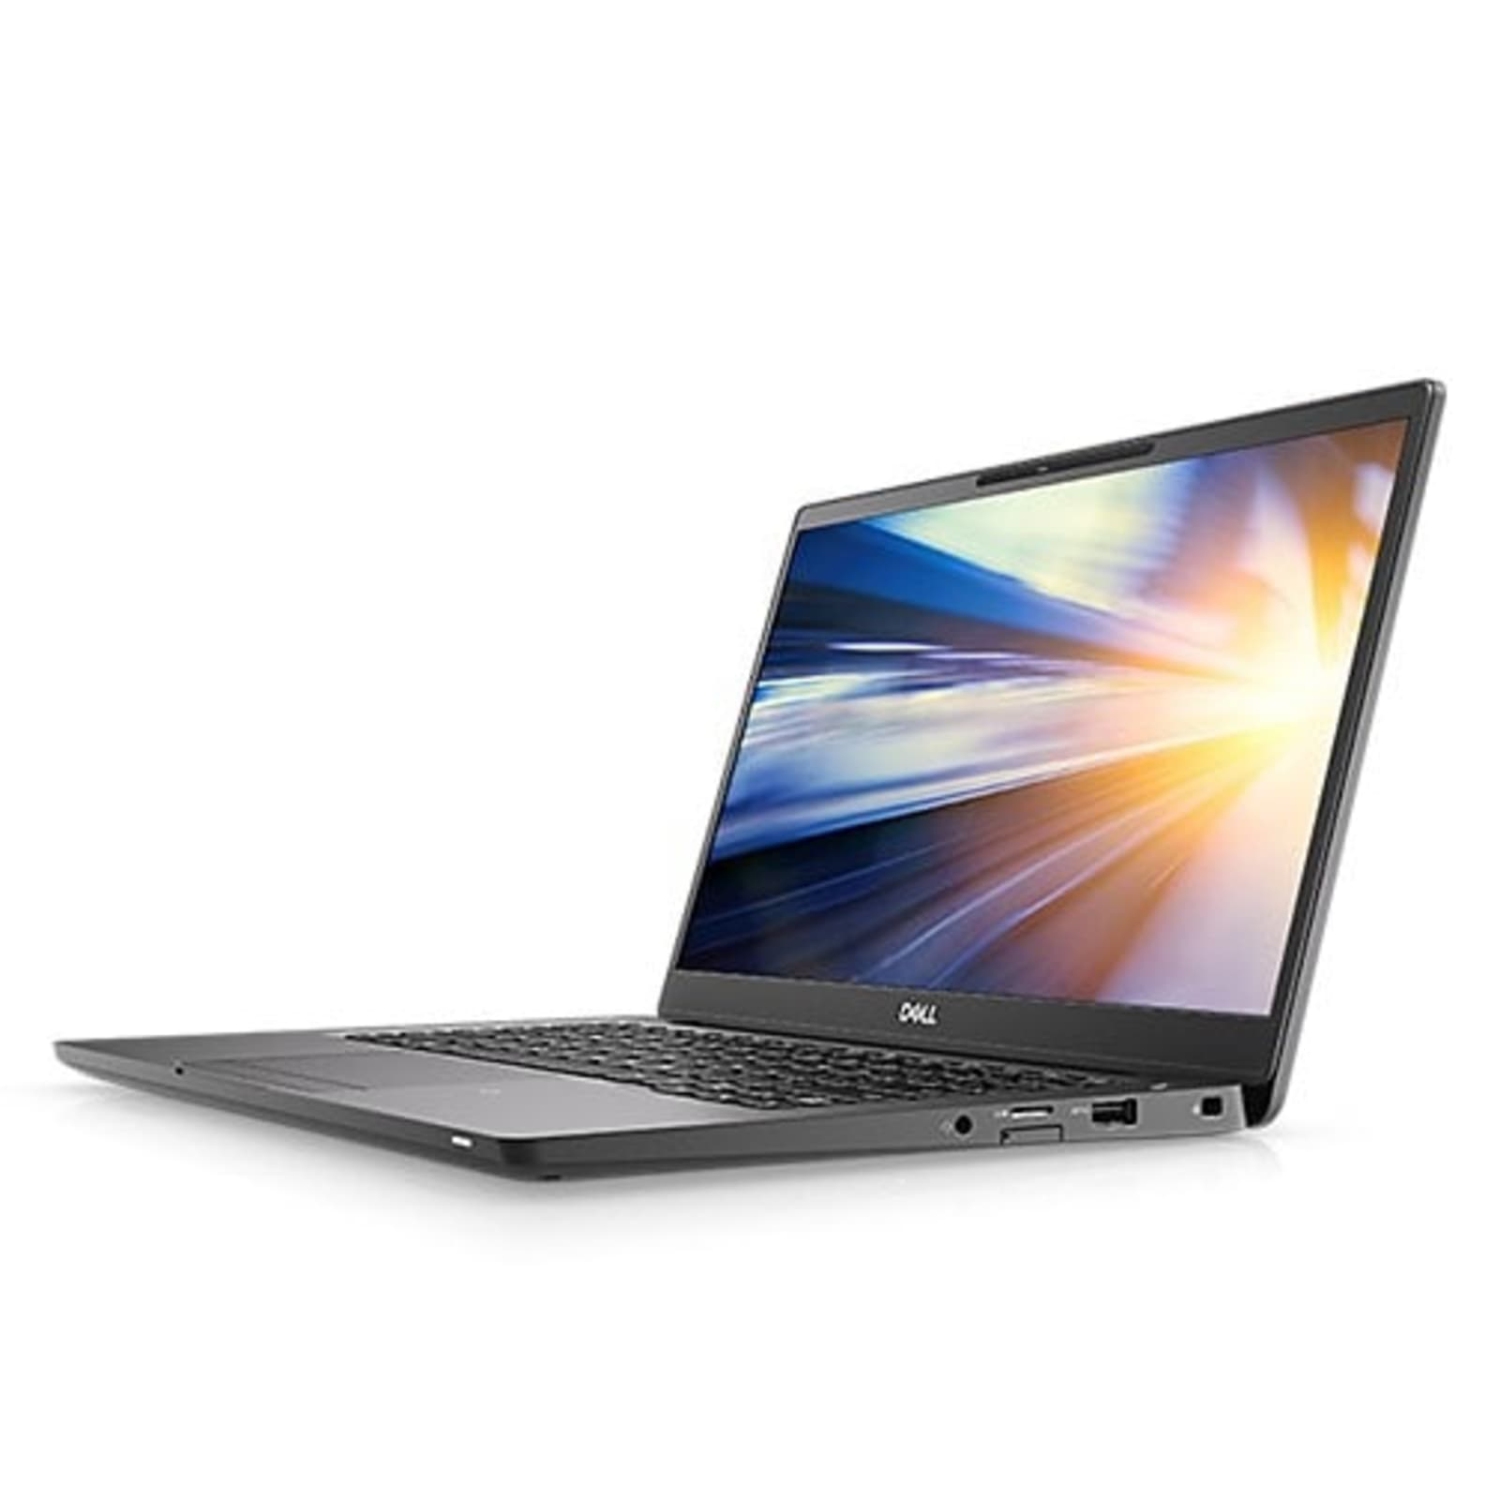 Refurbished (Excellent) - Dell Latitude 7000 7300 Laptop (2019